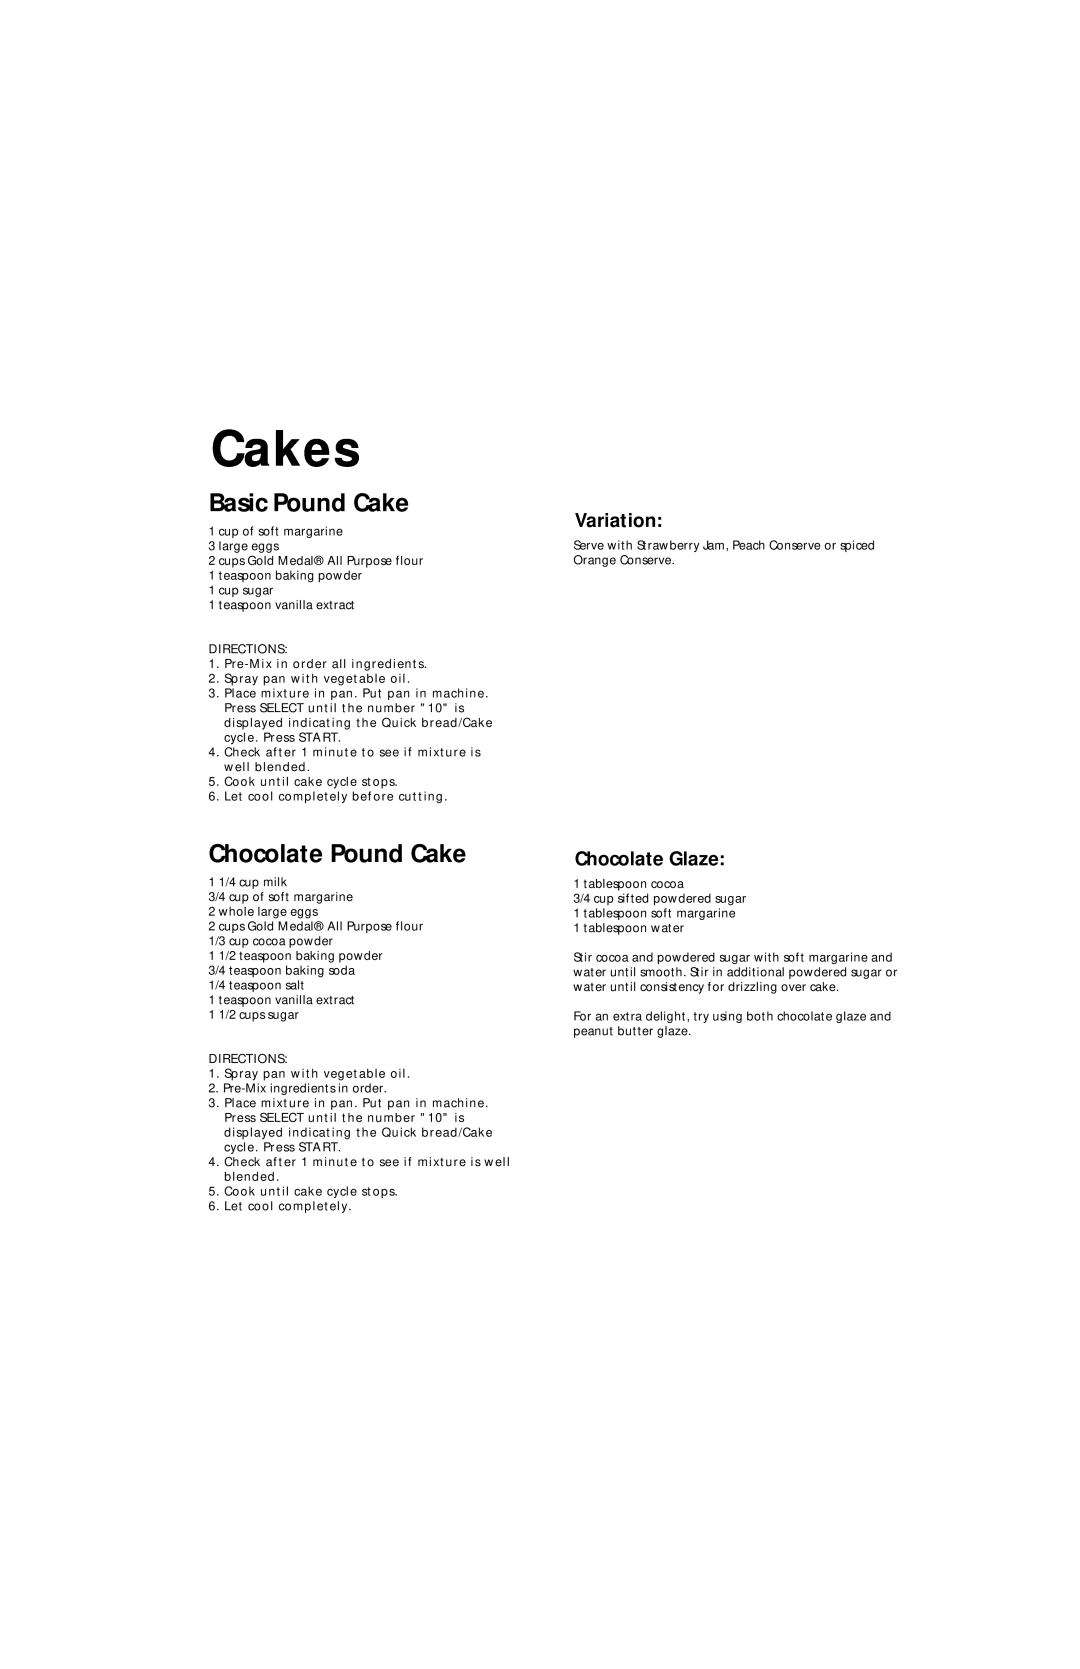 Oster Bread & Dough Maker manual Cakes, Basic Pound Cake, Chocolate Pound Cake, Variation, Chocolate Glaze 